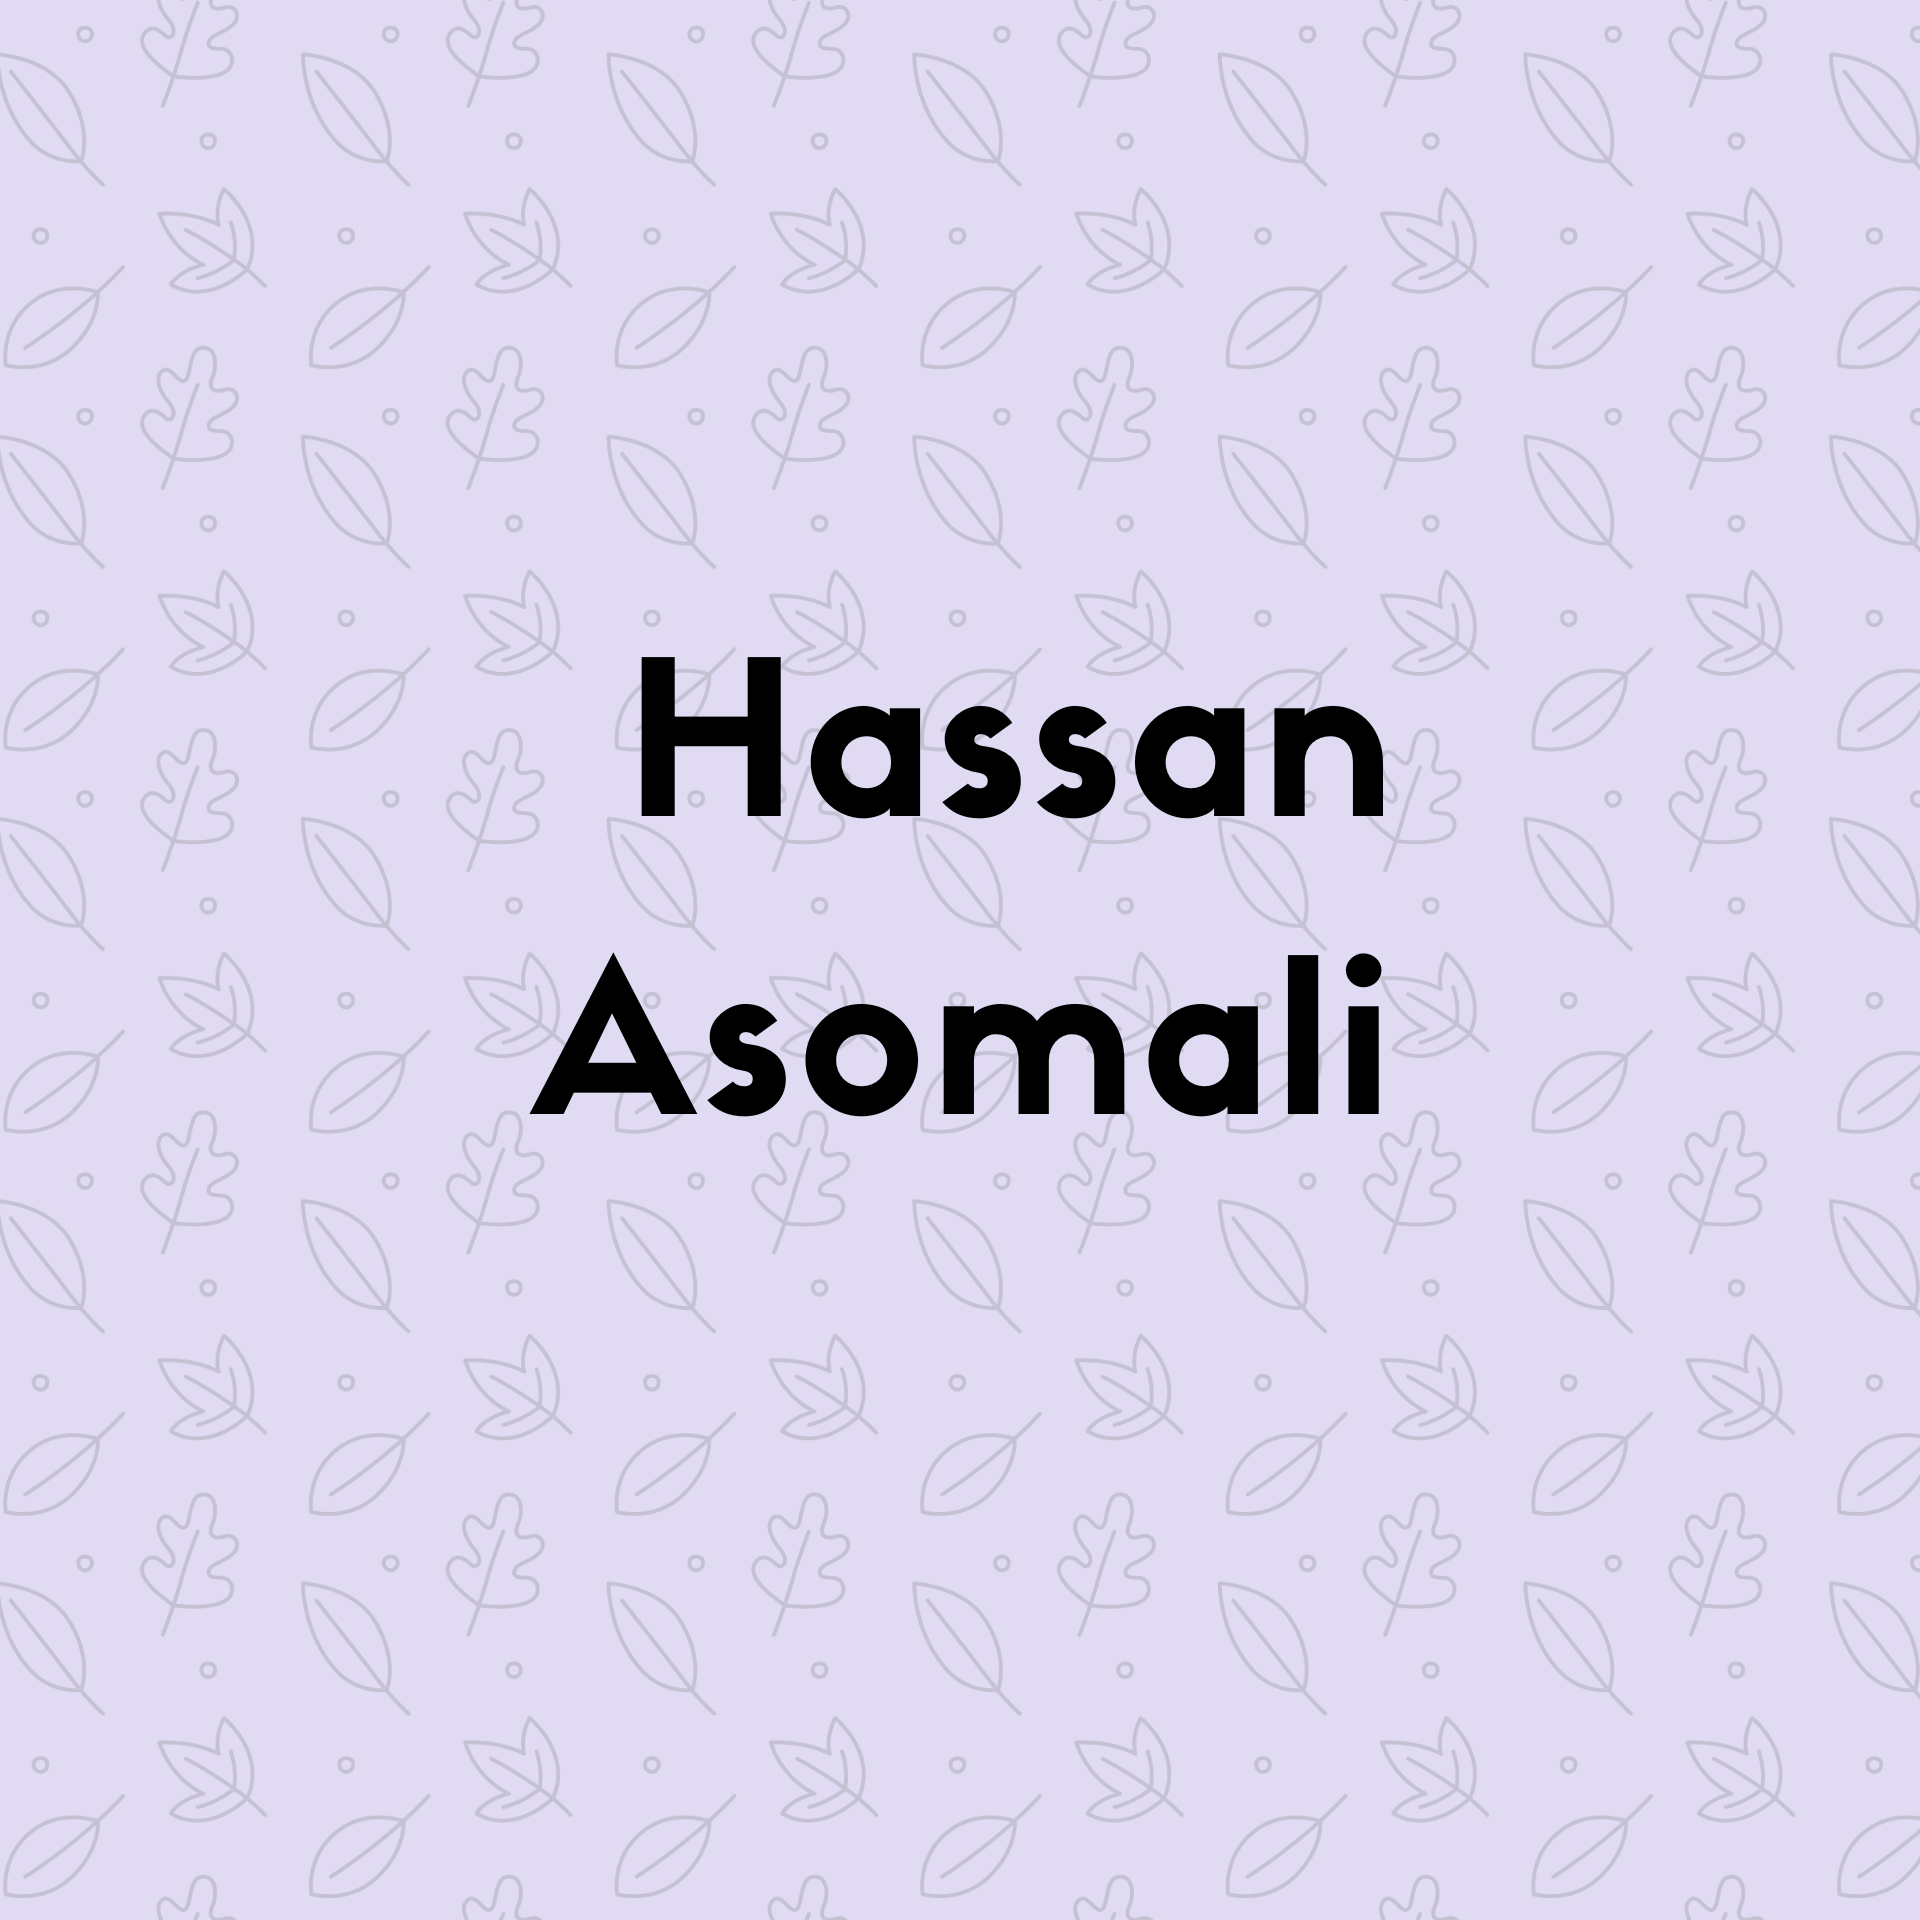  Hassan Asomali